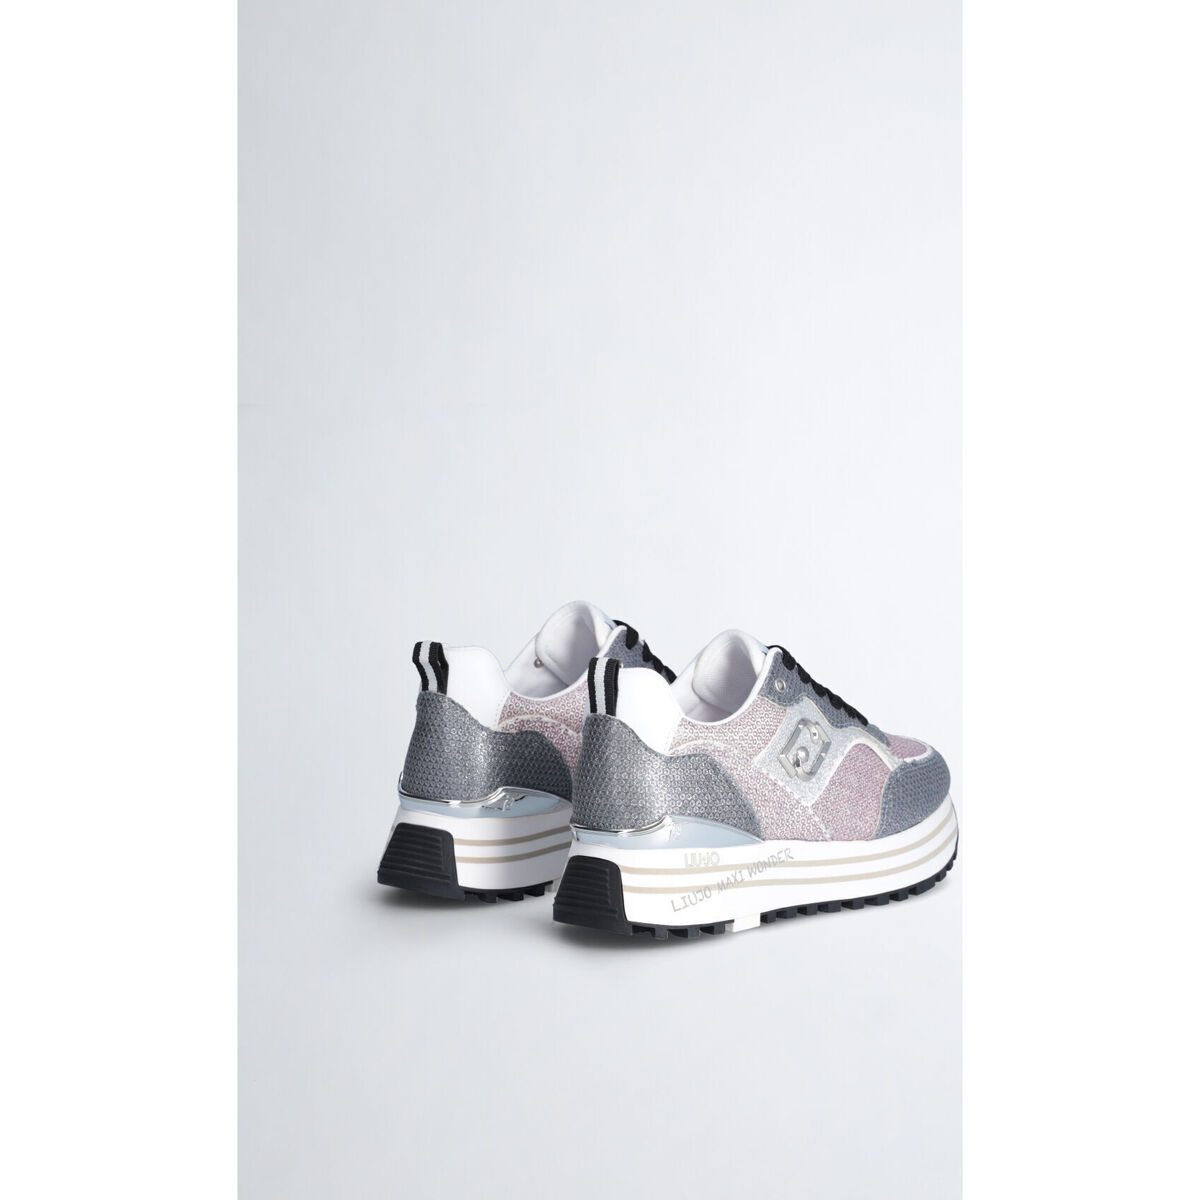 Liu Jo Argenté Sneakers plateforme avec paillettes glitter k1TYTfYo